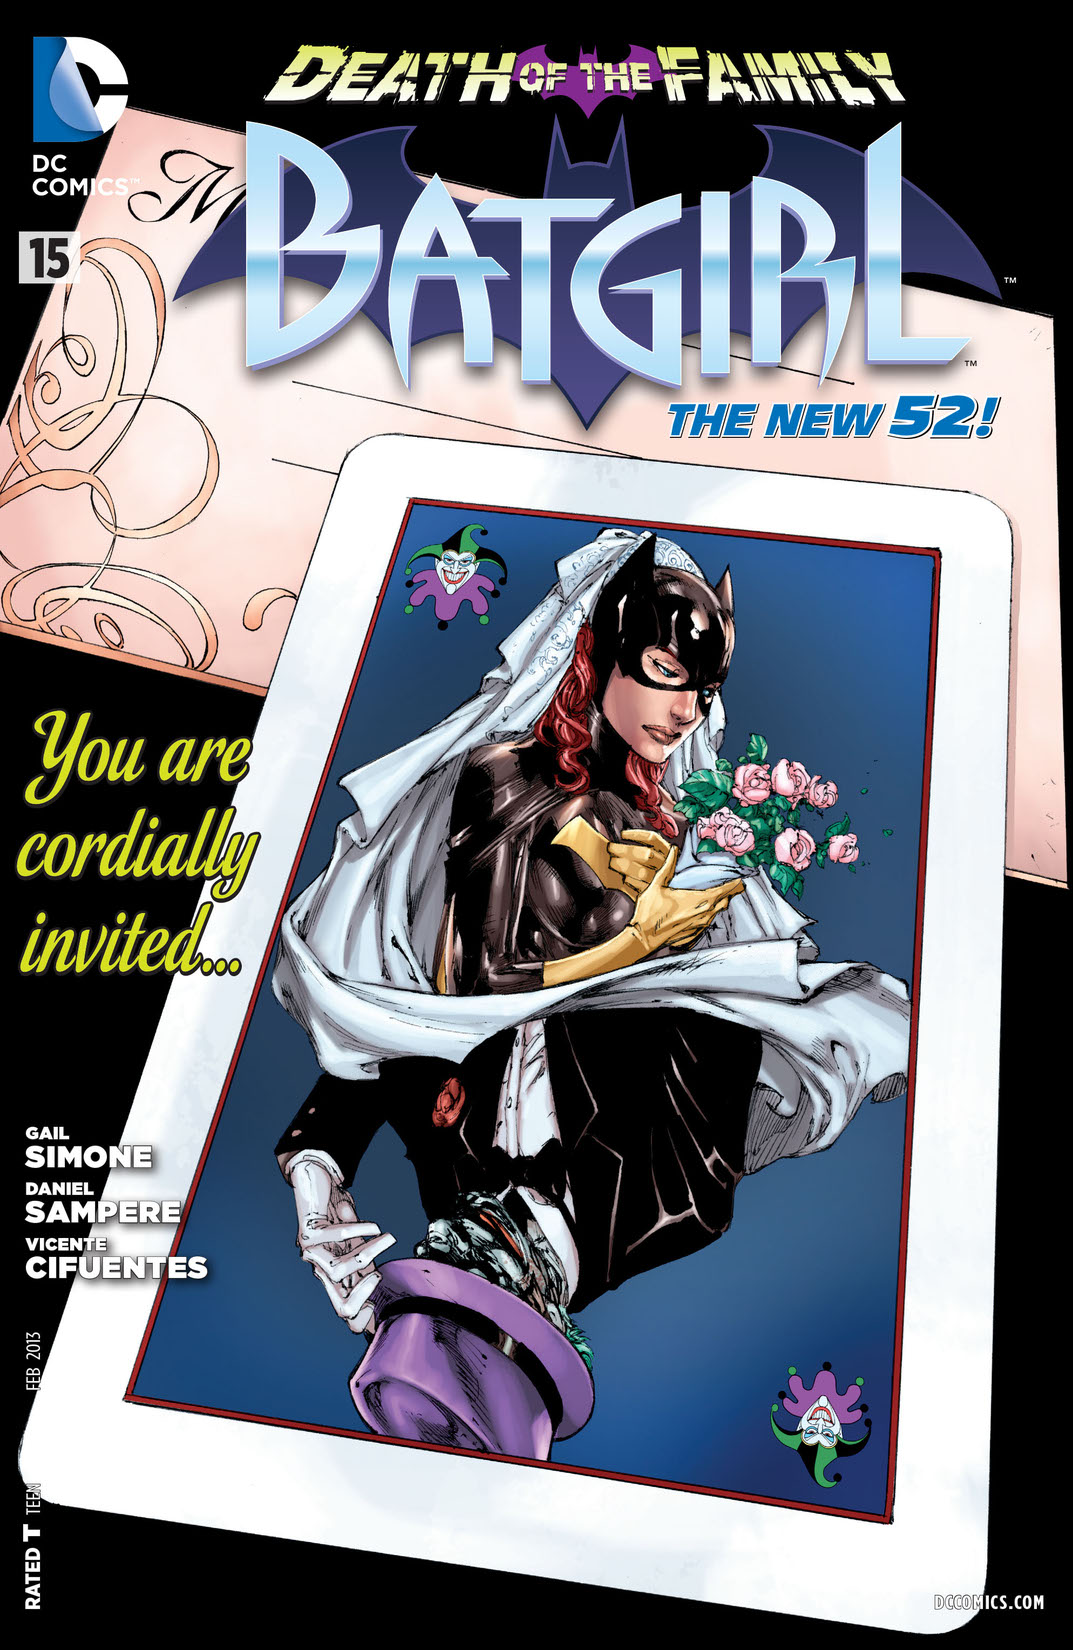 Batgirl (2011-) #15 preview images